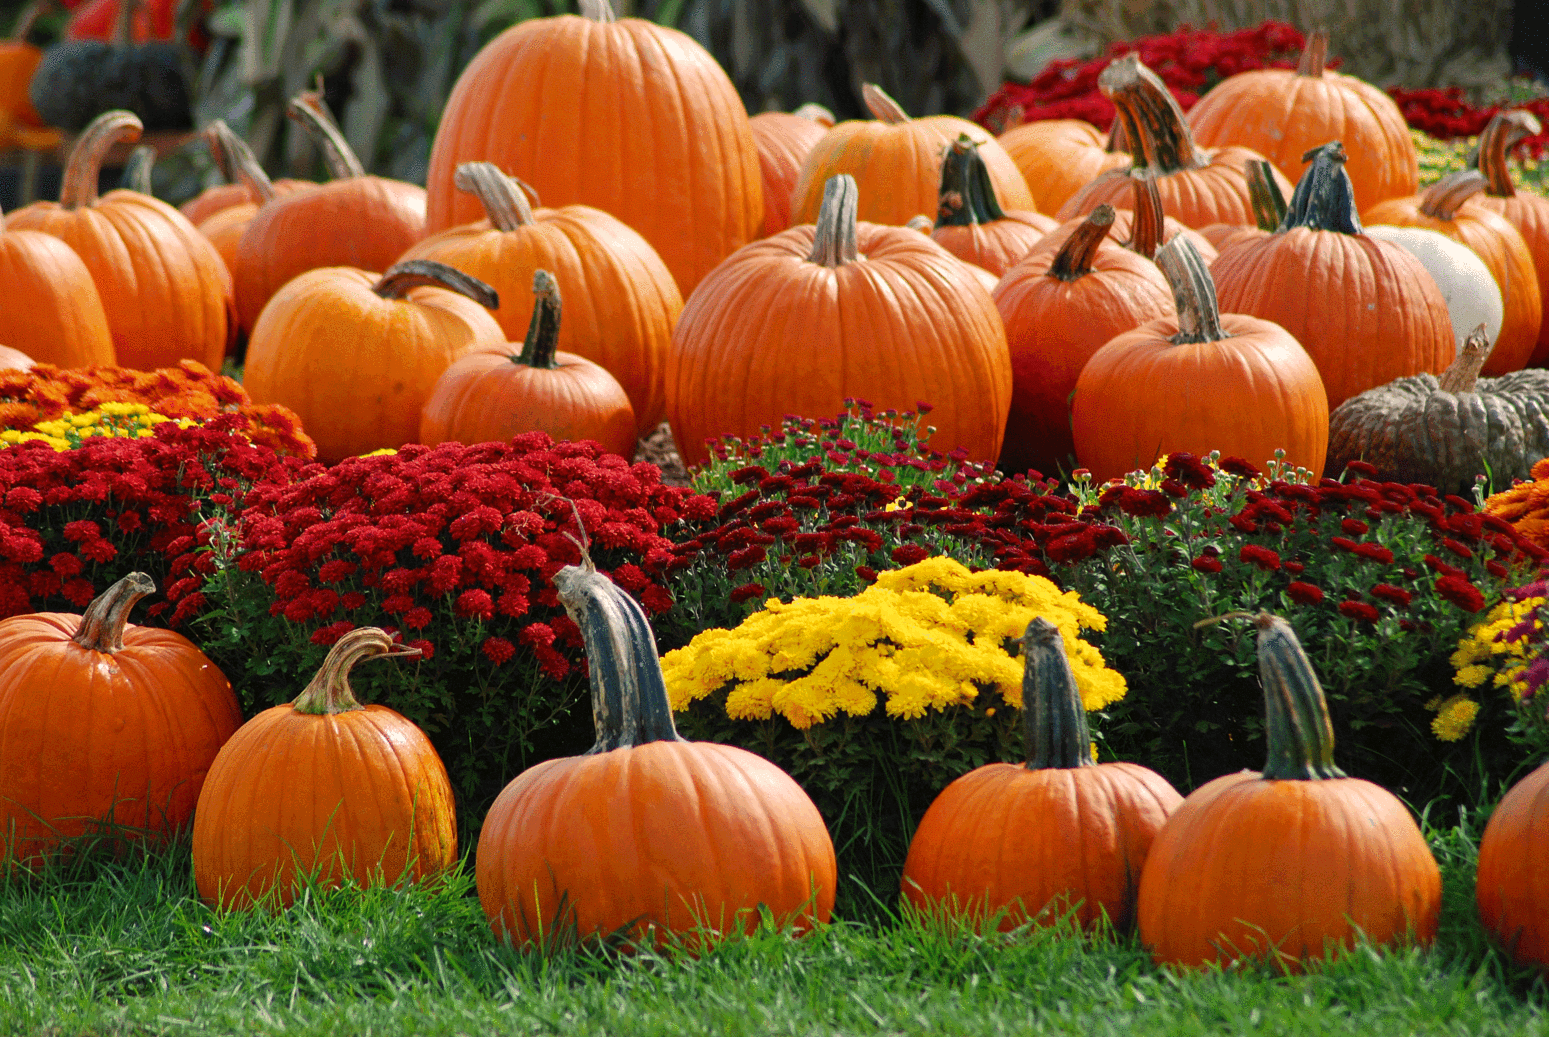 Autumn Pictures With Pumpkins For Desktop